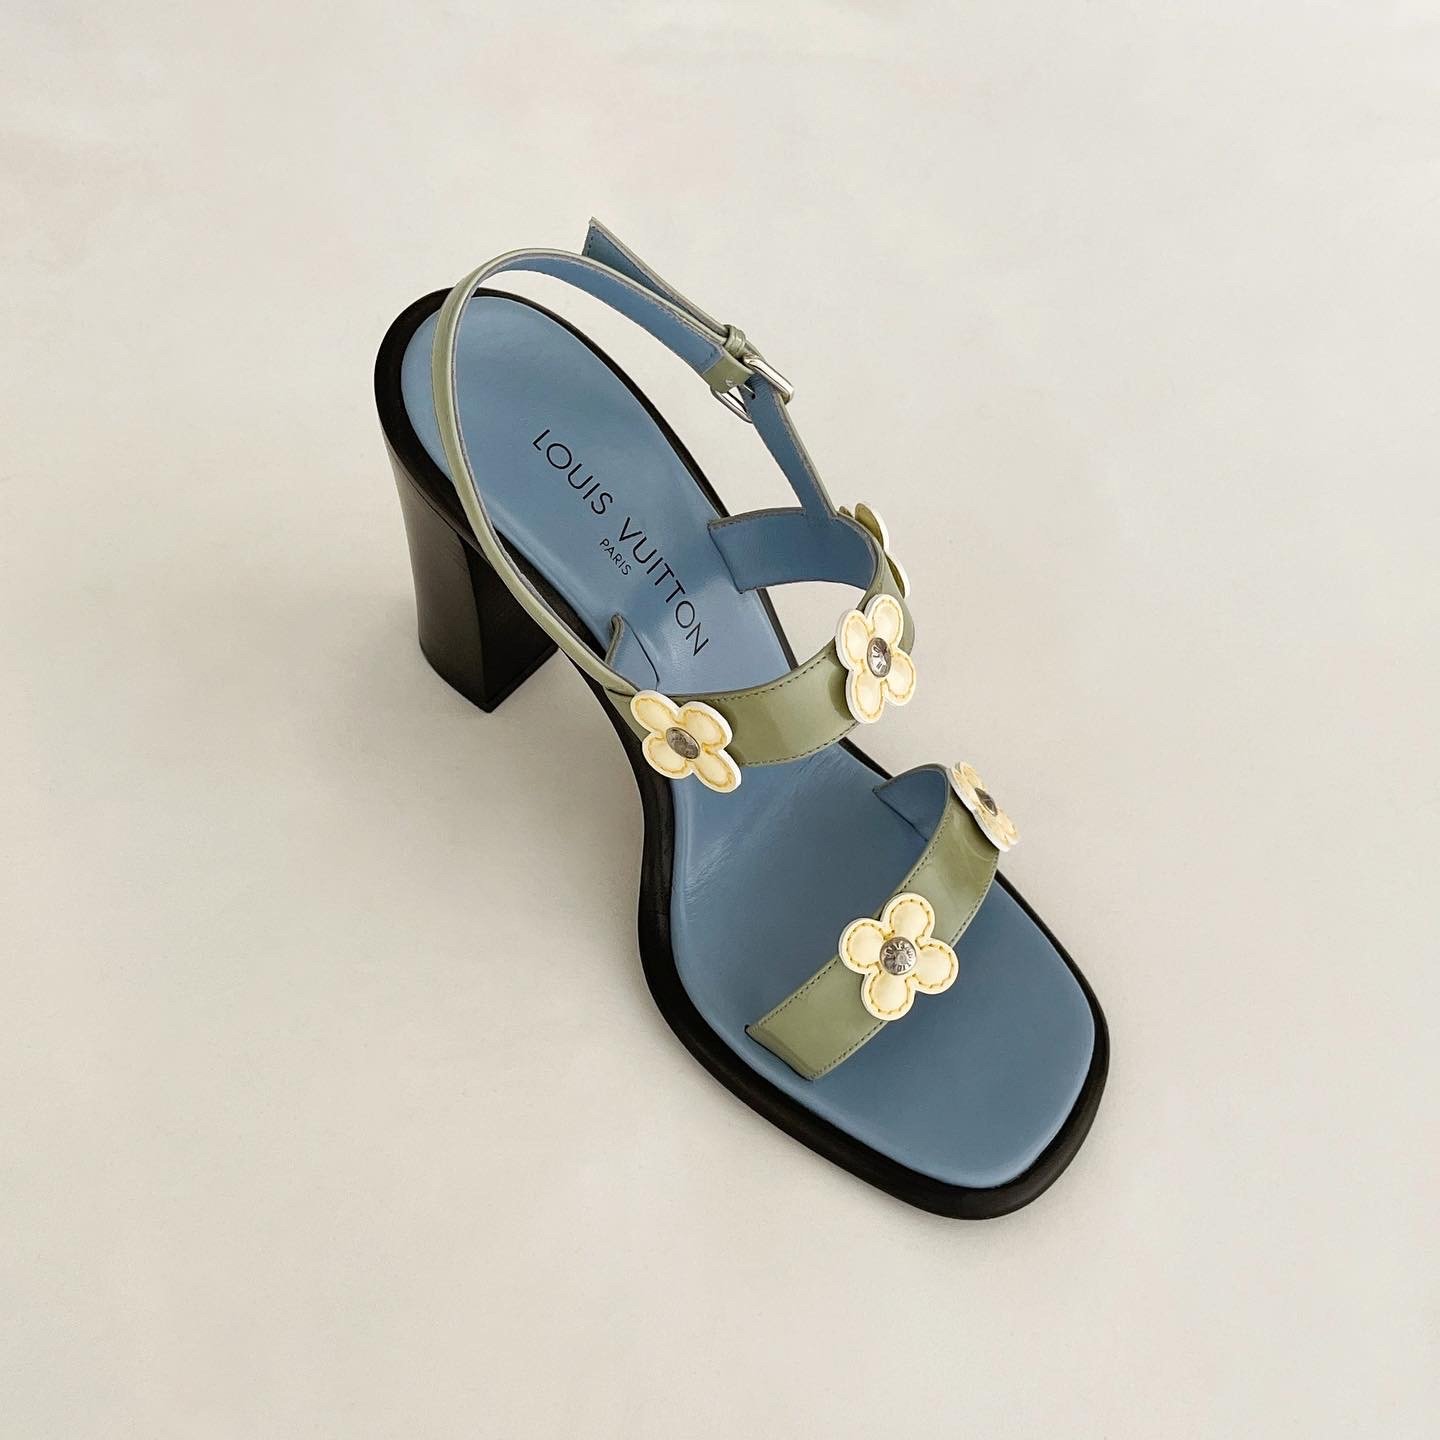 Louis Vuitton Black Satin Flower Embellished Flat Sandals Size 40